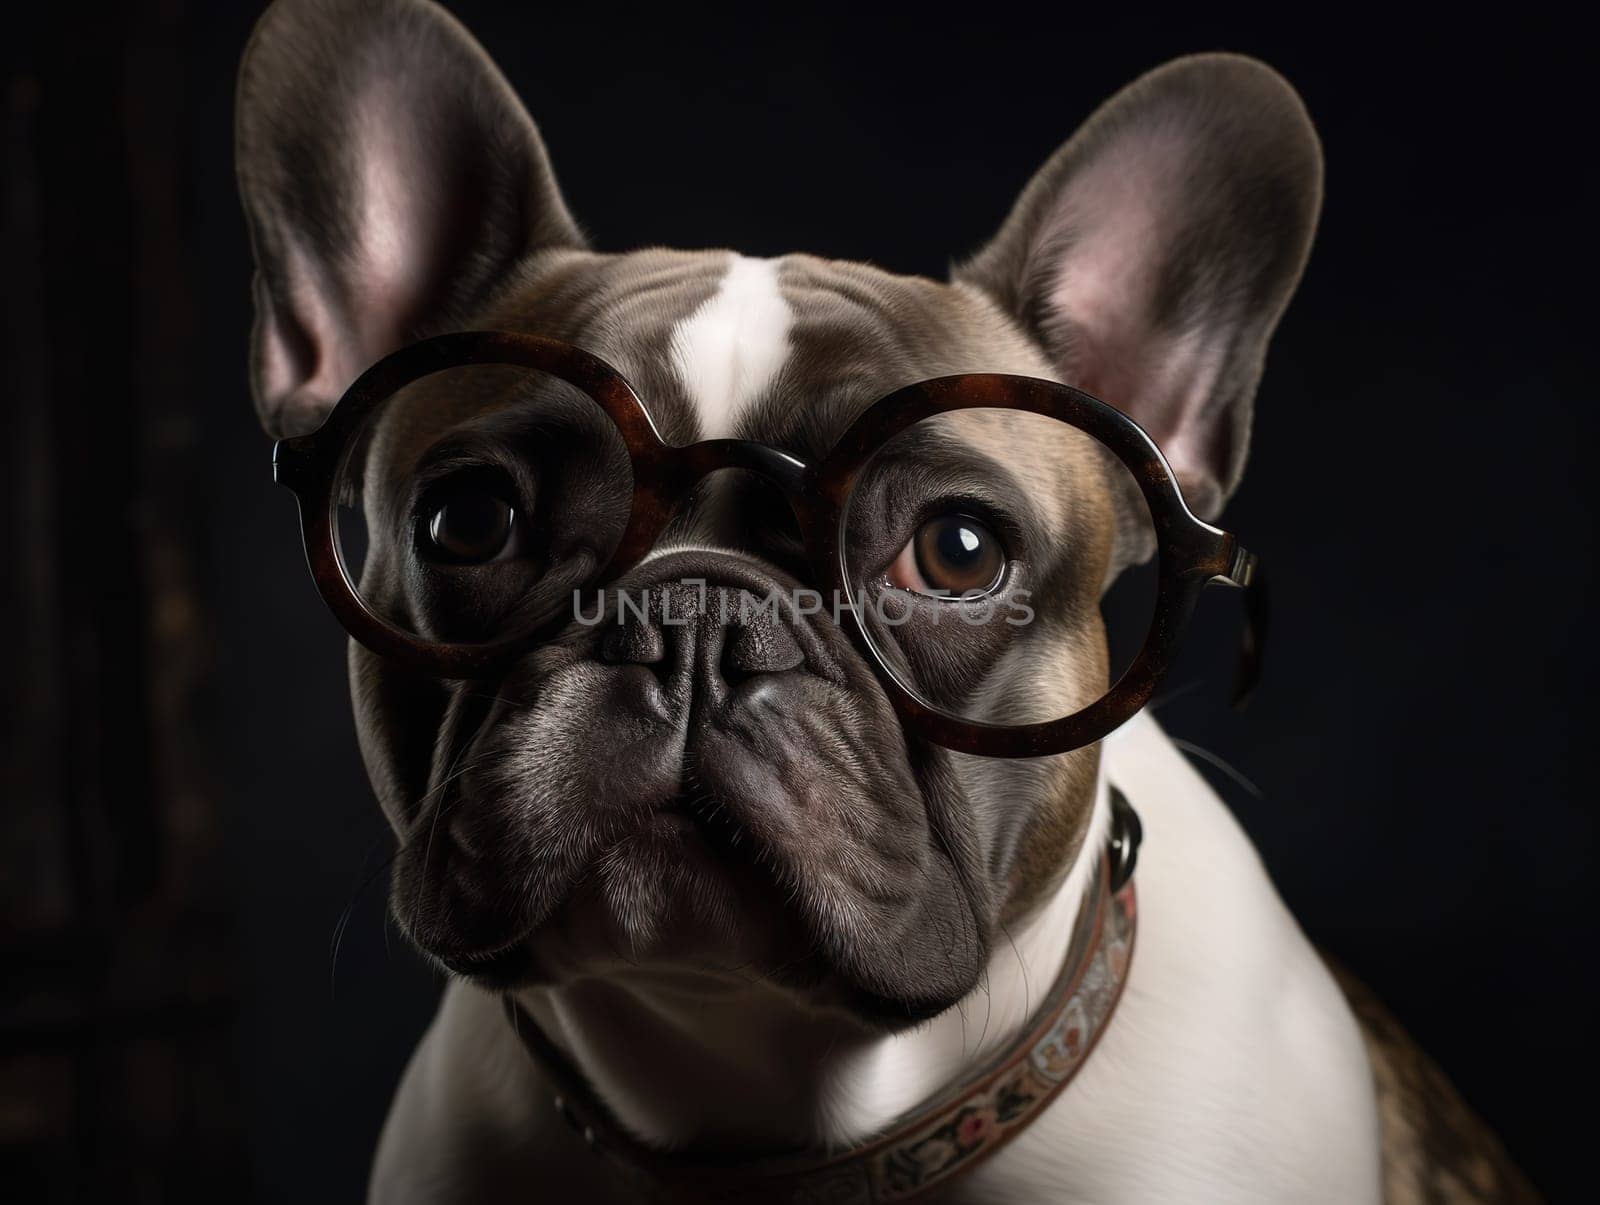 Cute Black Pug Dog Breed In Glasses Staring At Camera